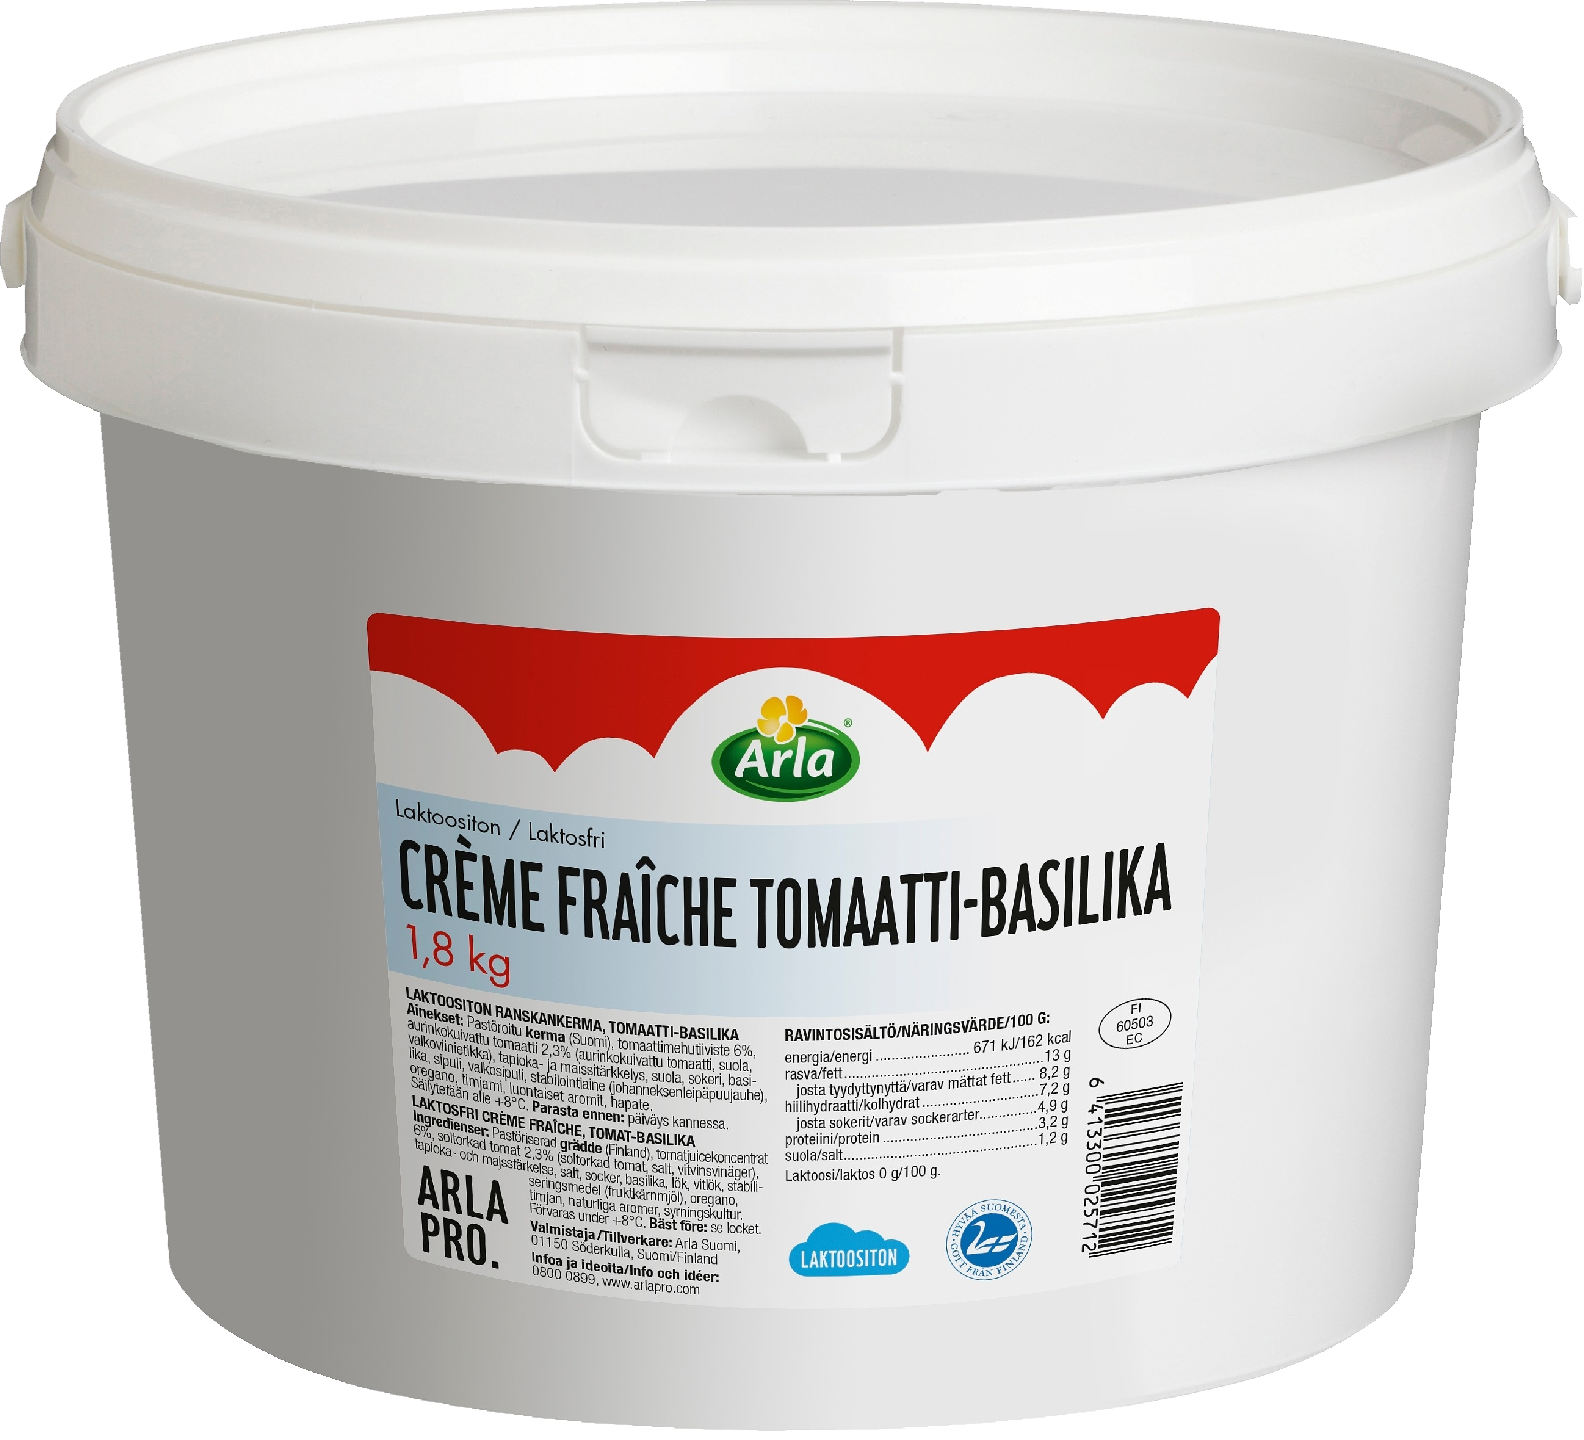 Arla Pro Crème Fraîche tomaatti-basilika laktoositon 1,8kg